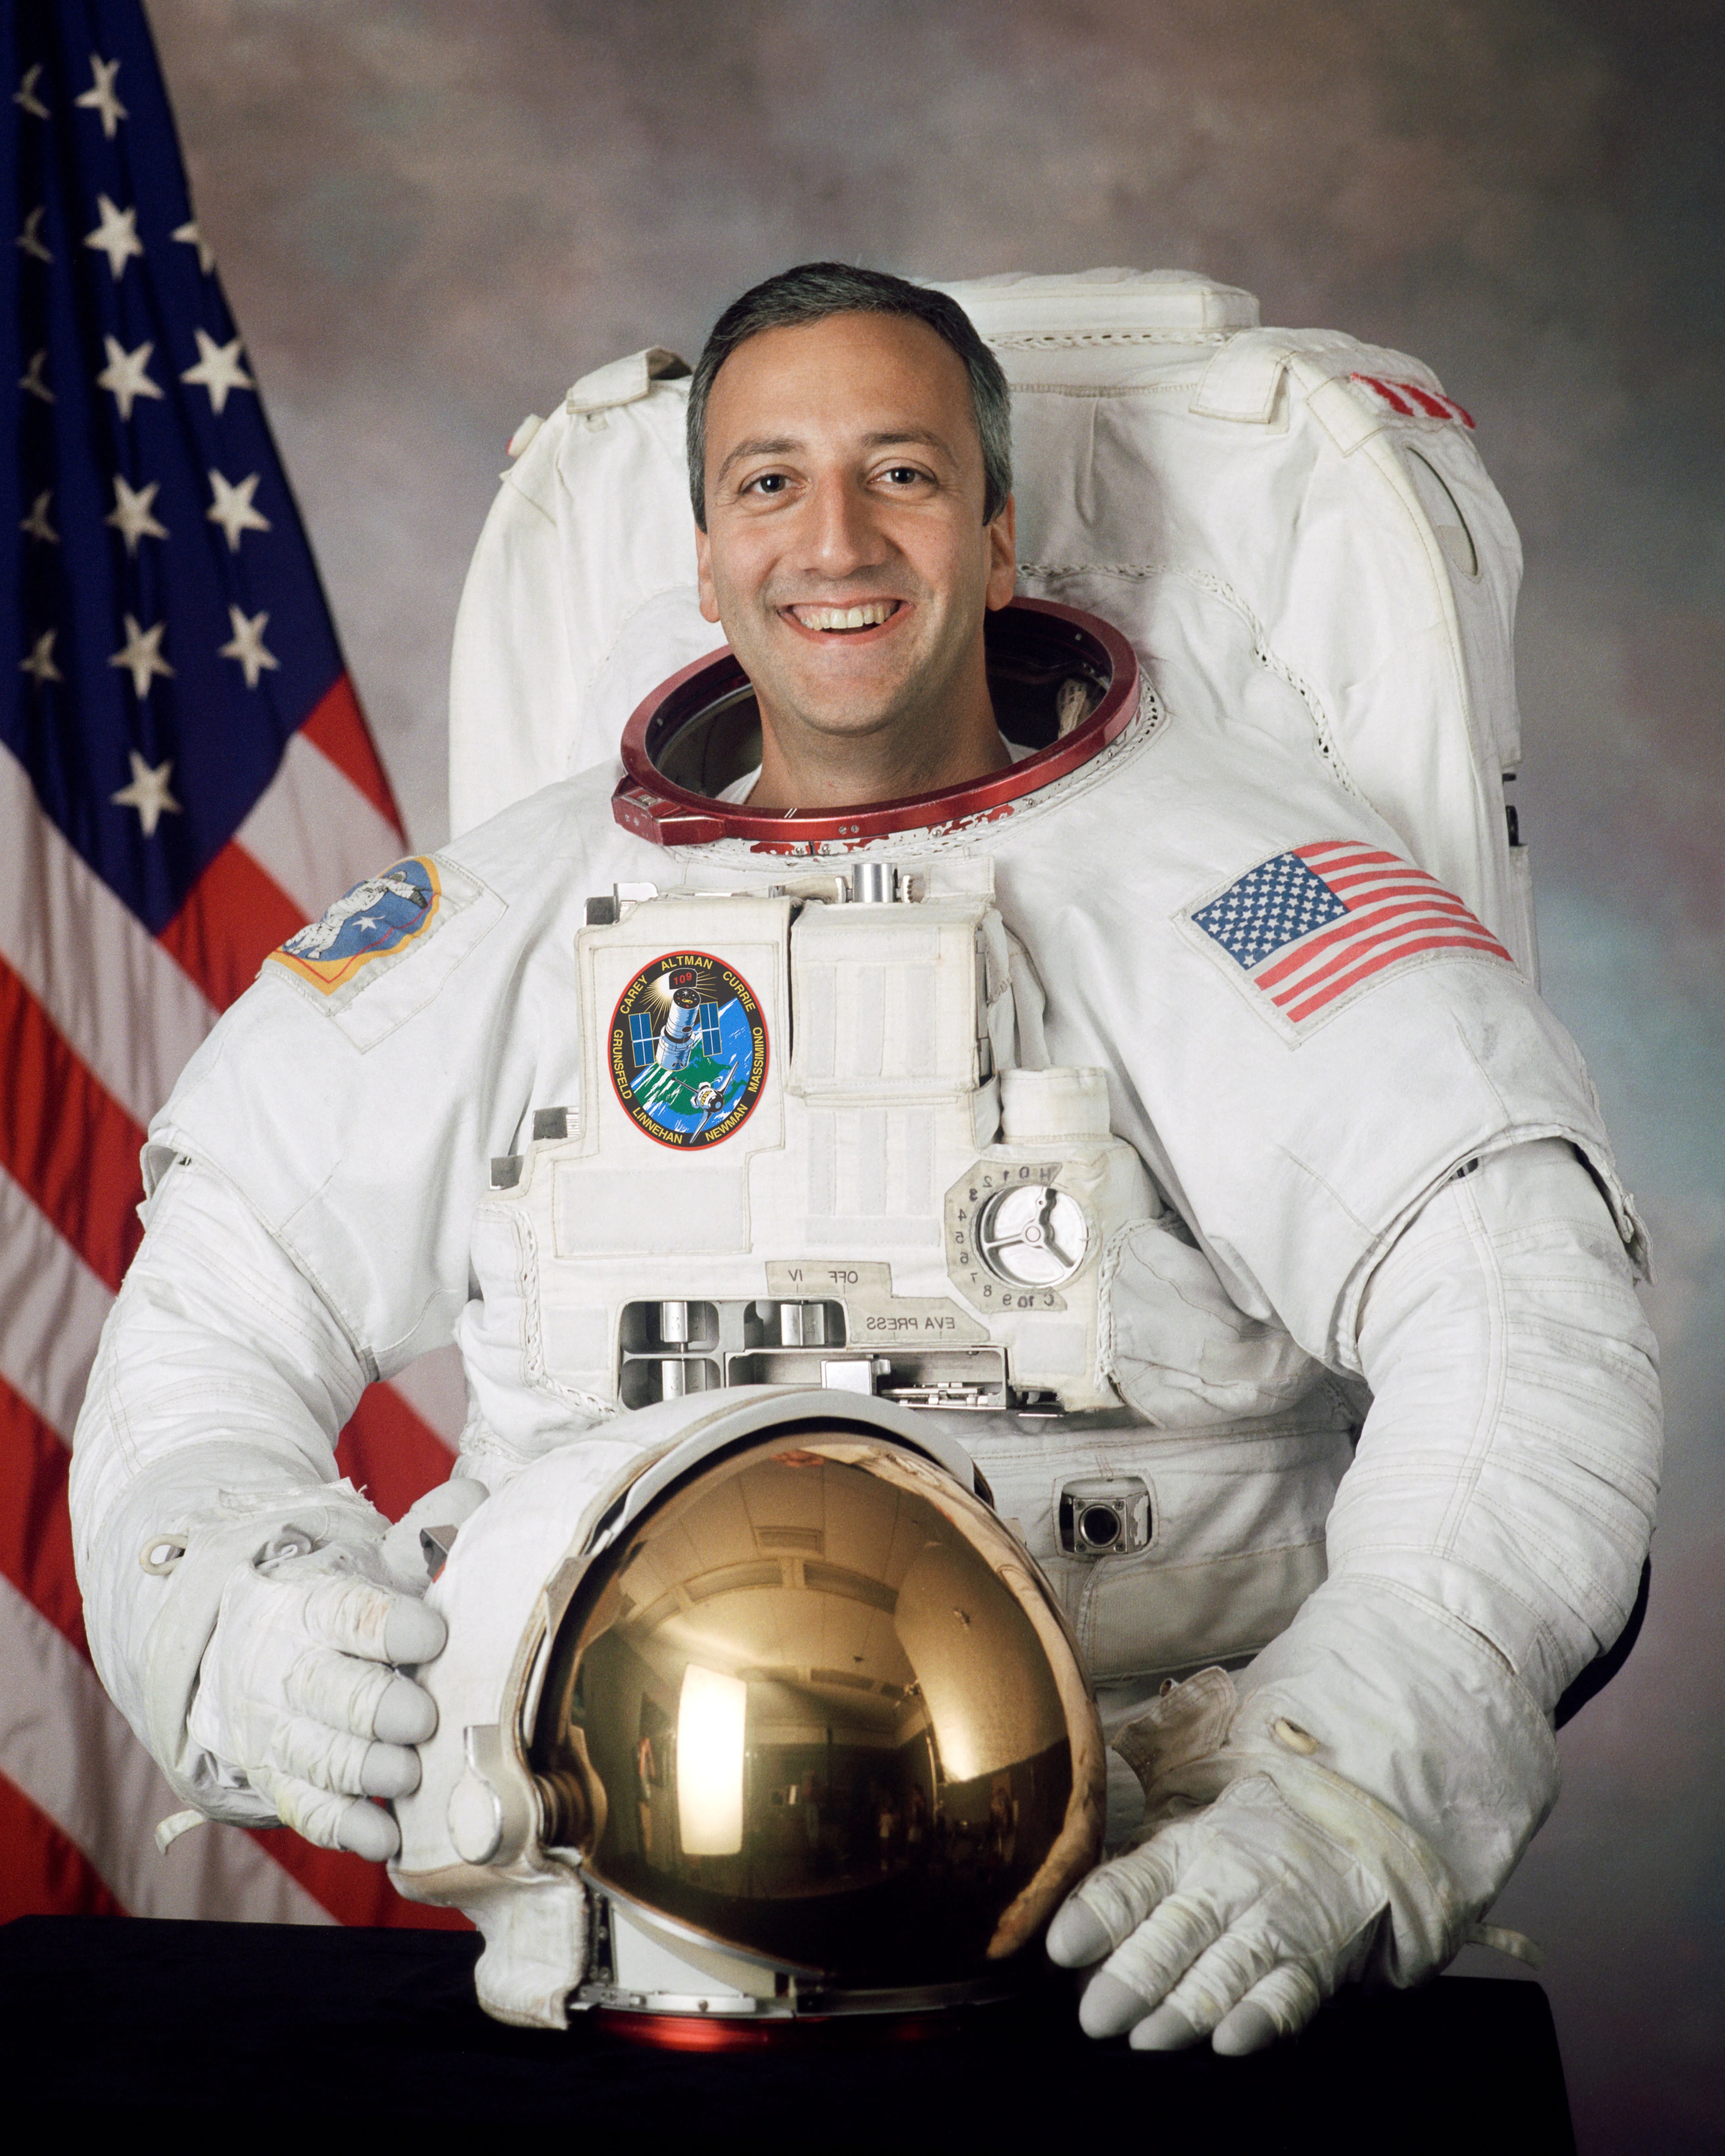 Official astronaut portrait of Michael Massimino.